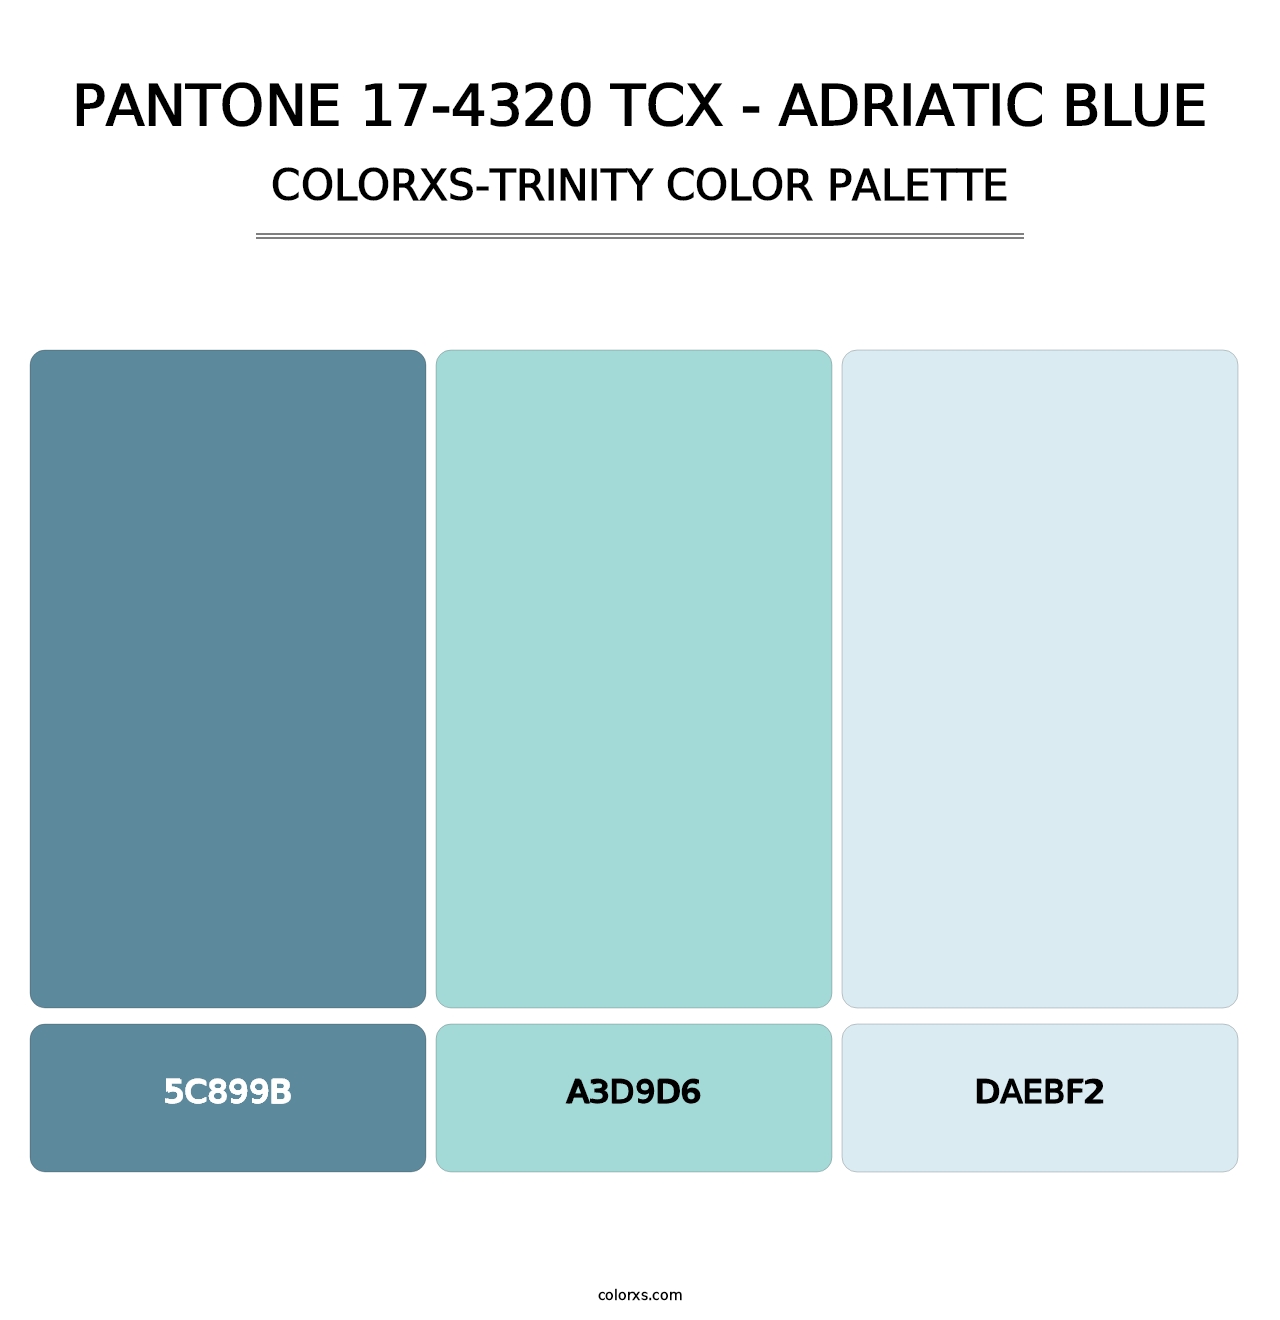 PANTONE 17-4320 TCX - Adriatic Blue - Colorxs Trinity Palette